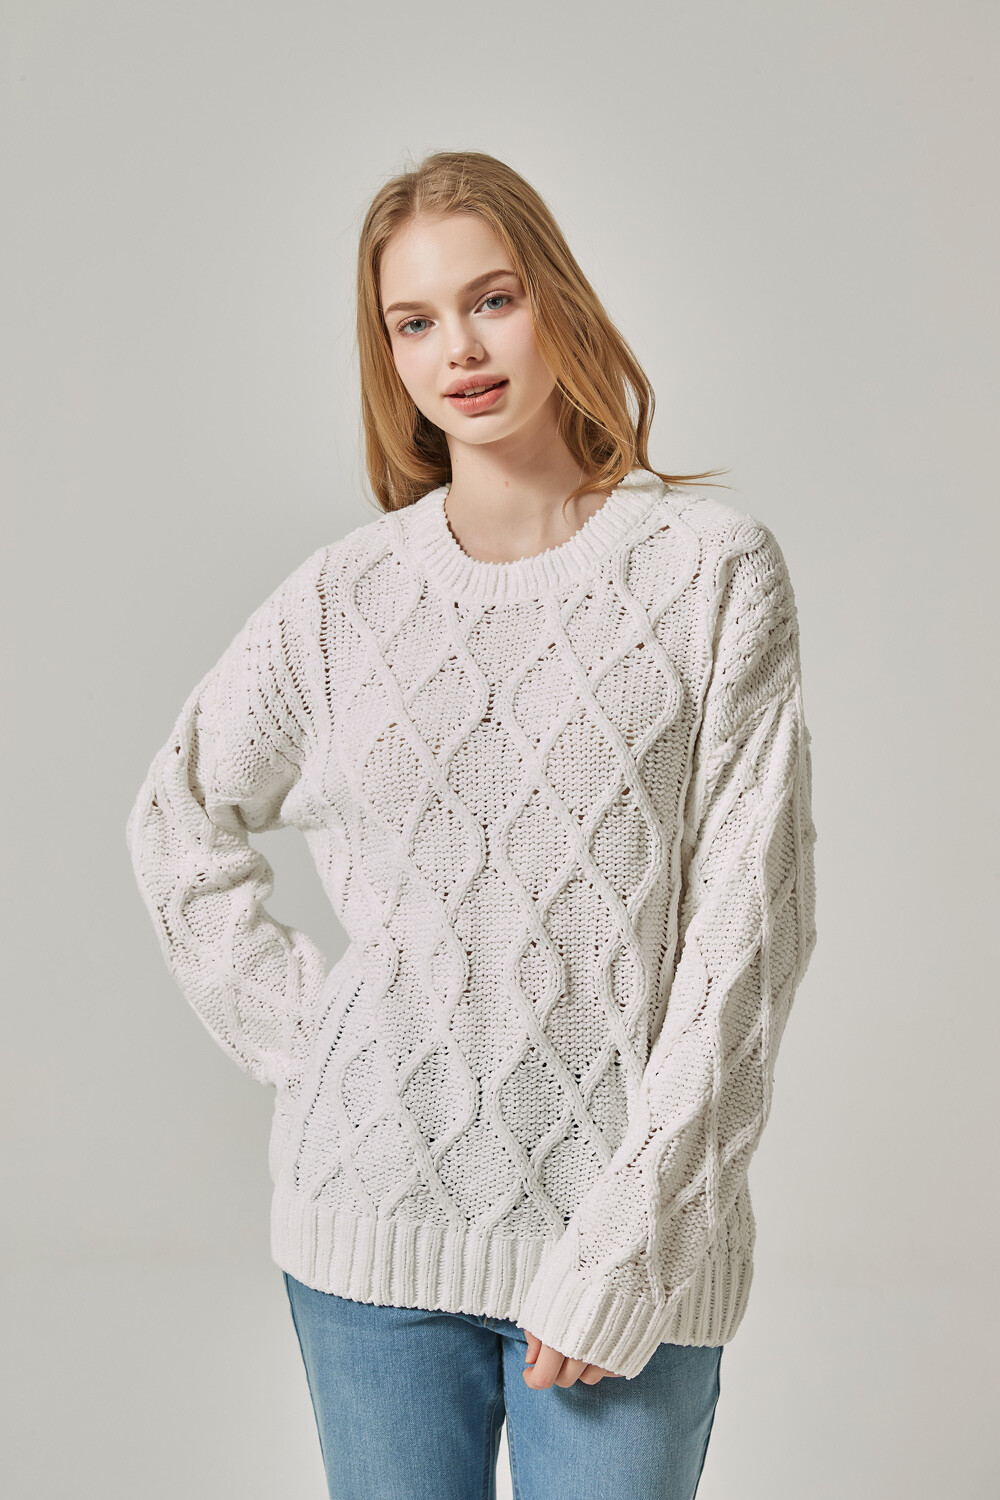 Sweater Loanina Marfil / Off White